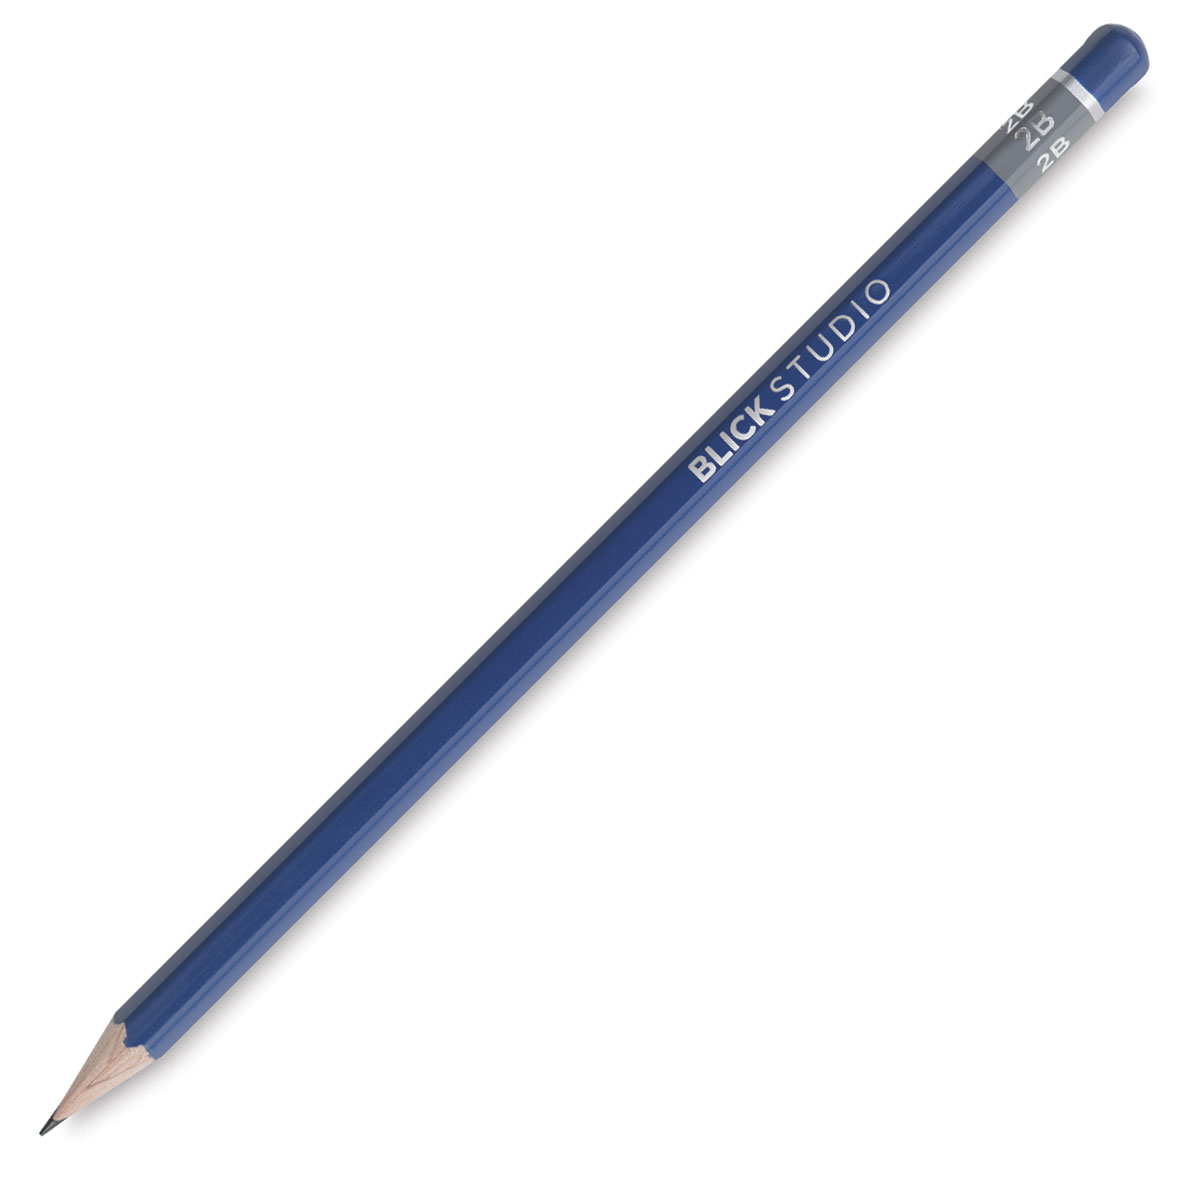 Blick Studio Drawing Pencil - 6B